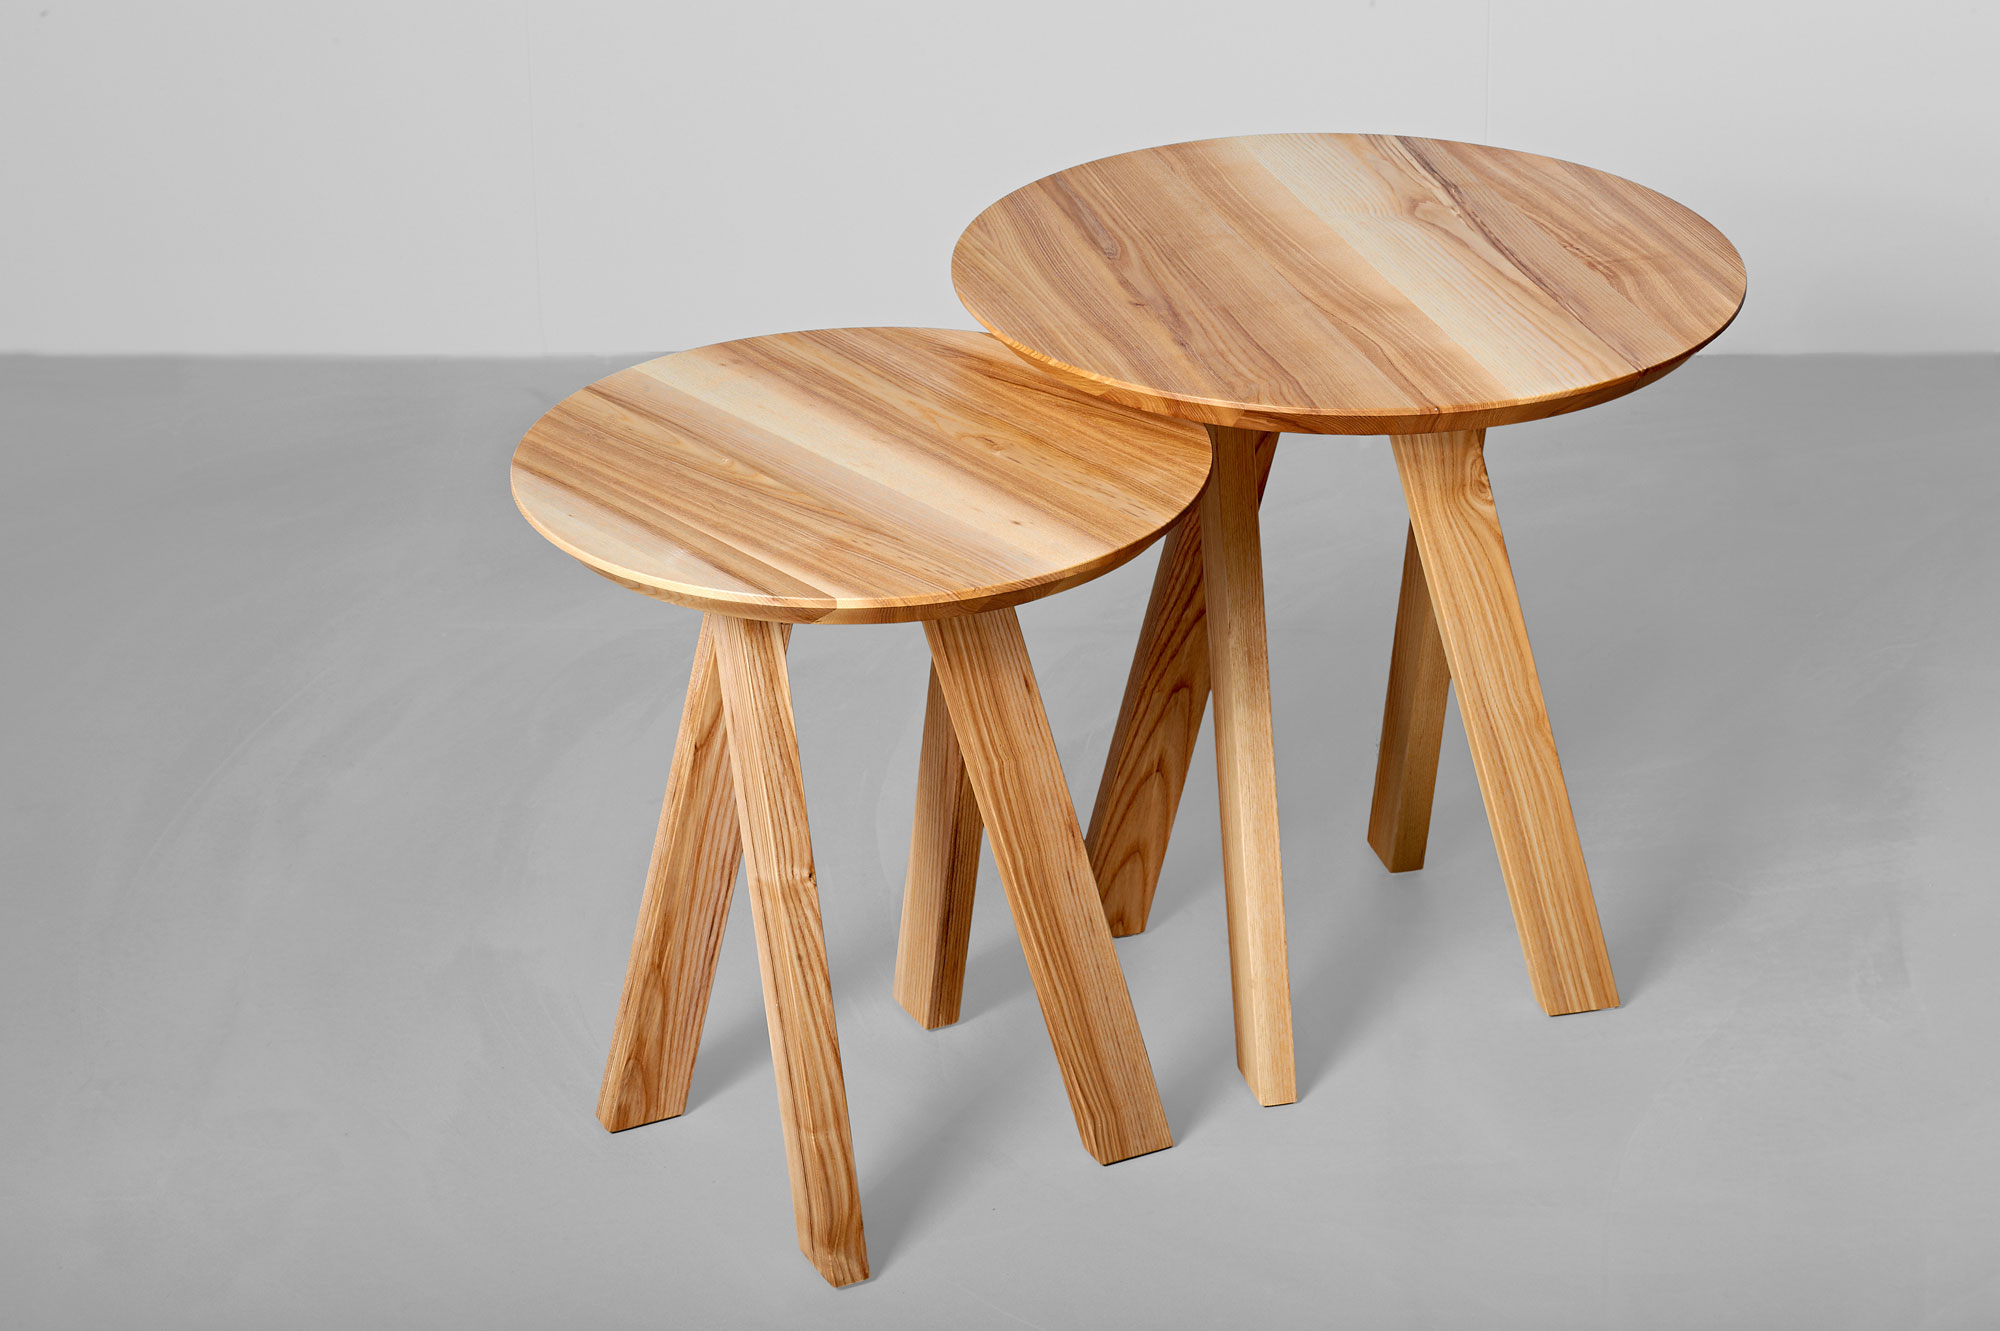 Designer Coffee Table ZIRKEL RG 4707 custom made in solid wood by vitamin design